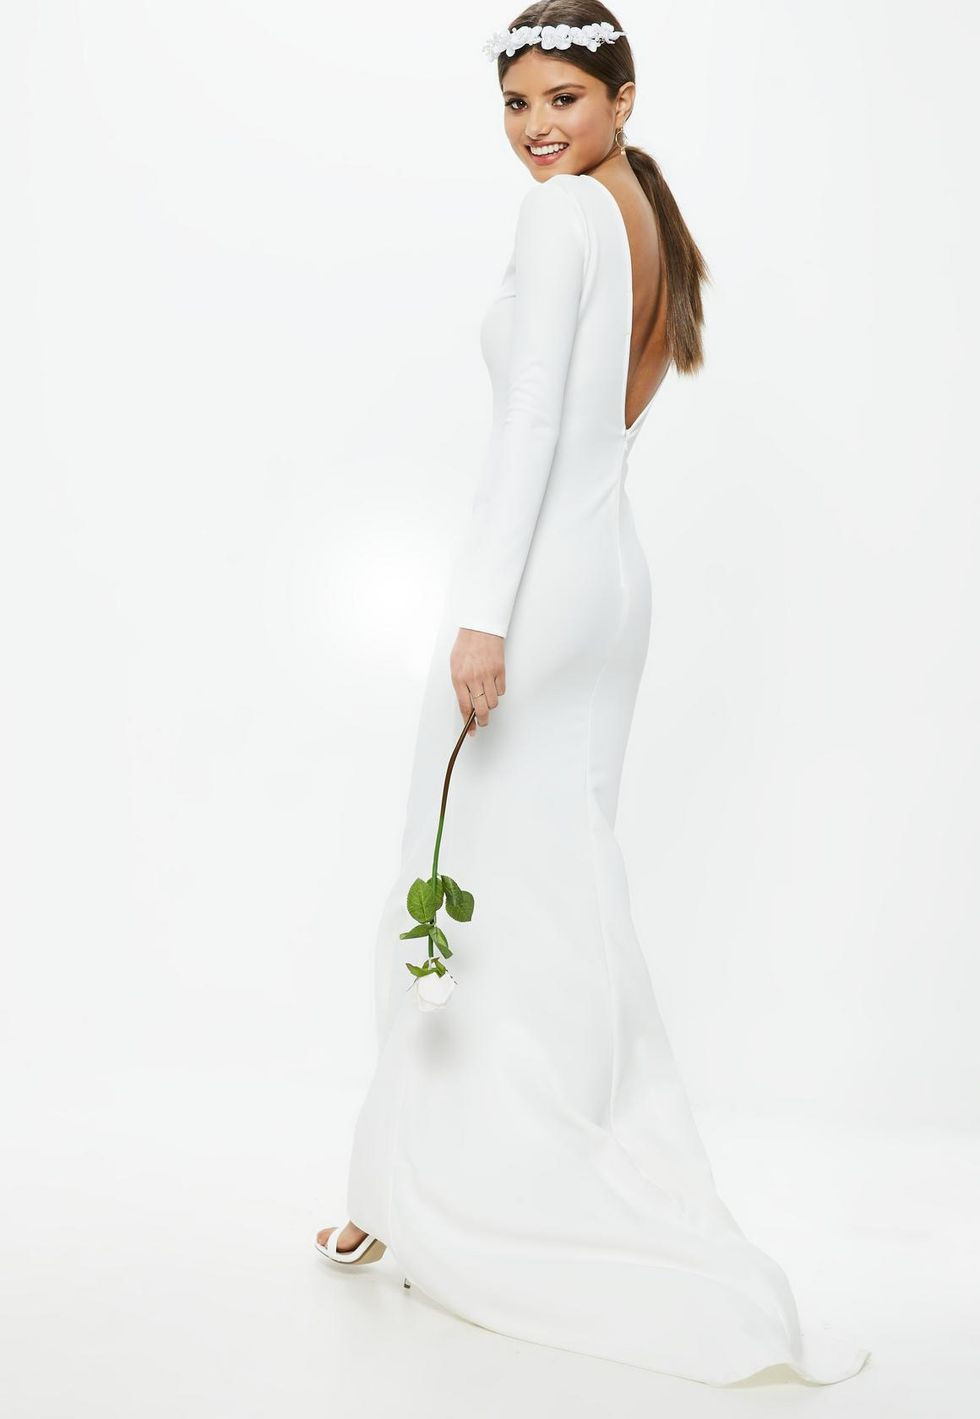 Missguided Wedding Dress - Cheap Wedding Dress - WeddingPlanner.co.uk